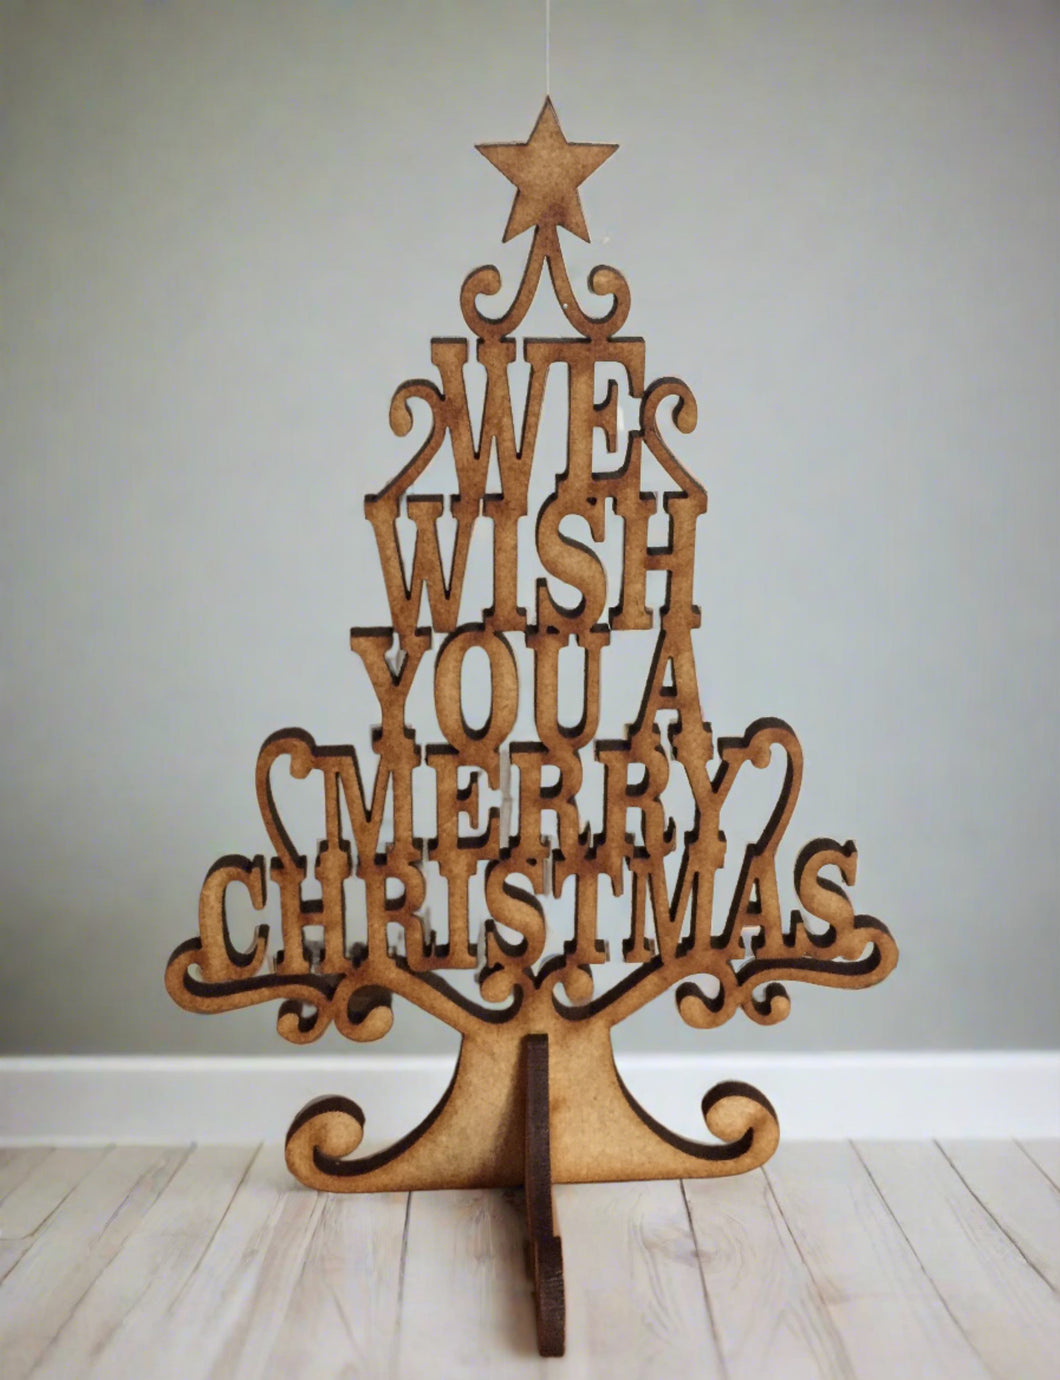 Freestending wooden we wish you a merry christmas tree - Laser LLama Designs Ltd